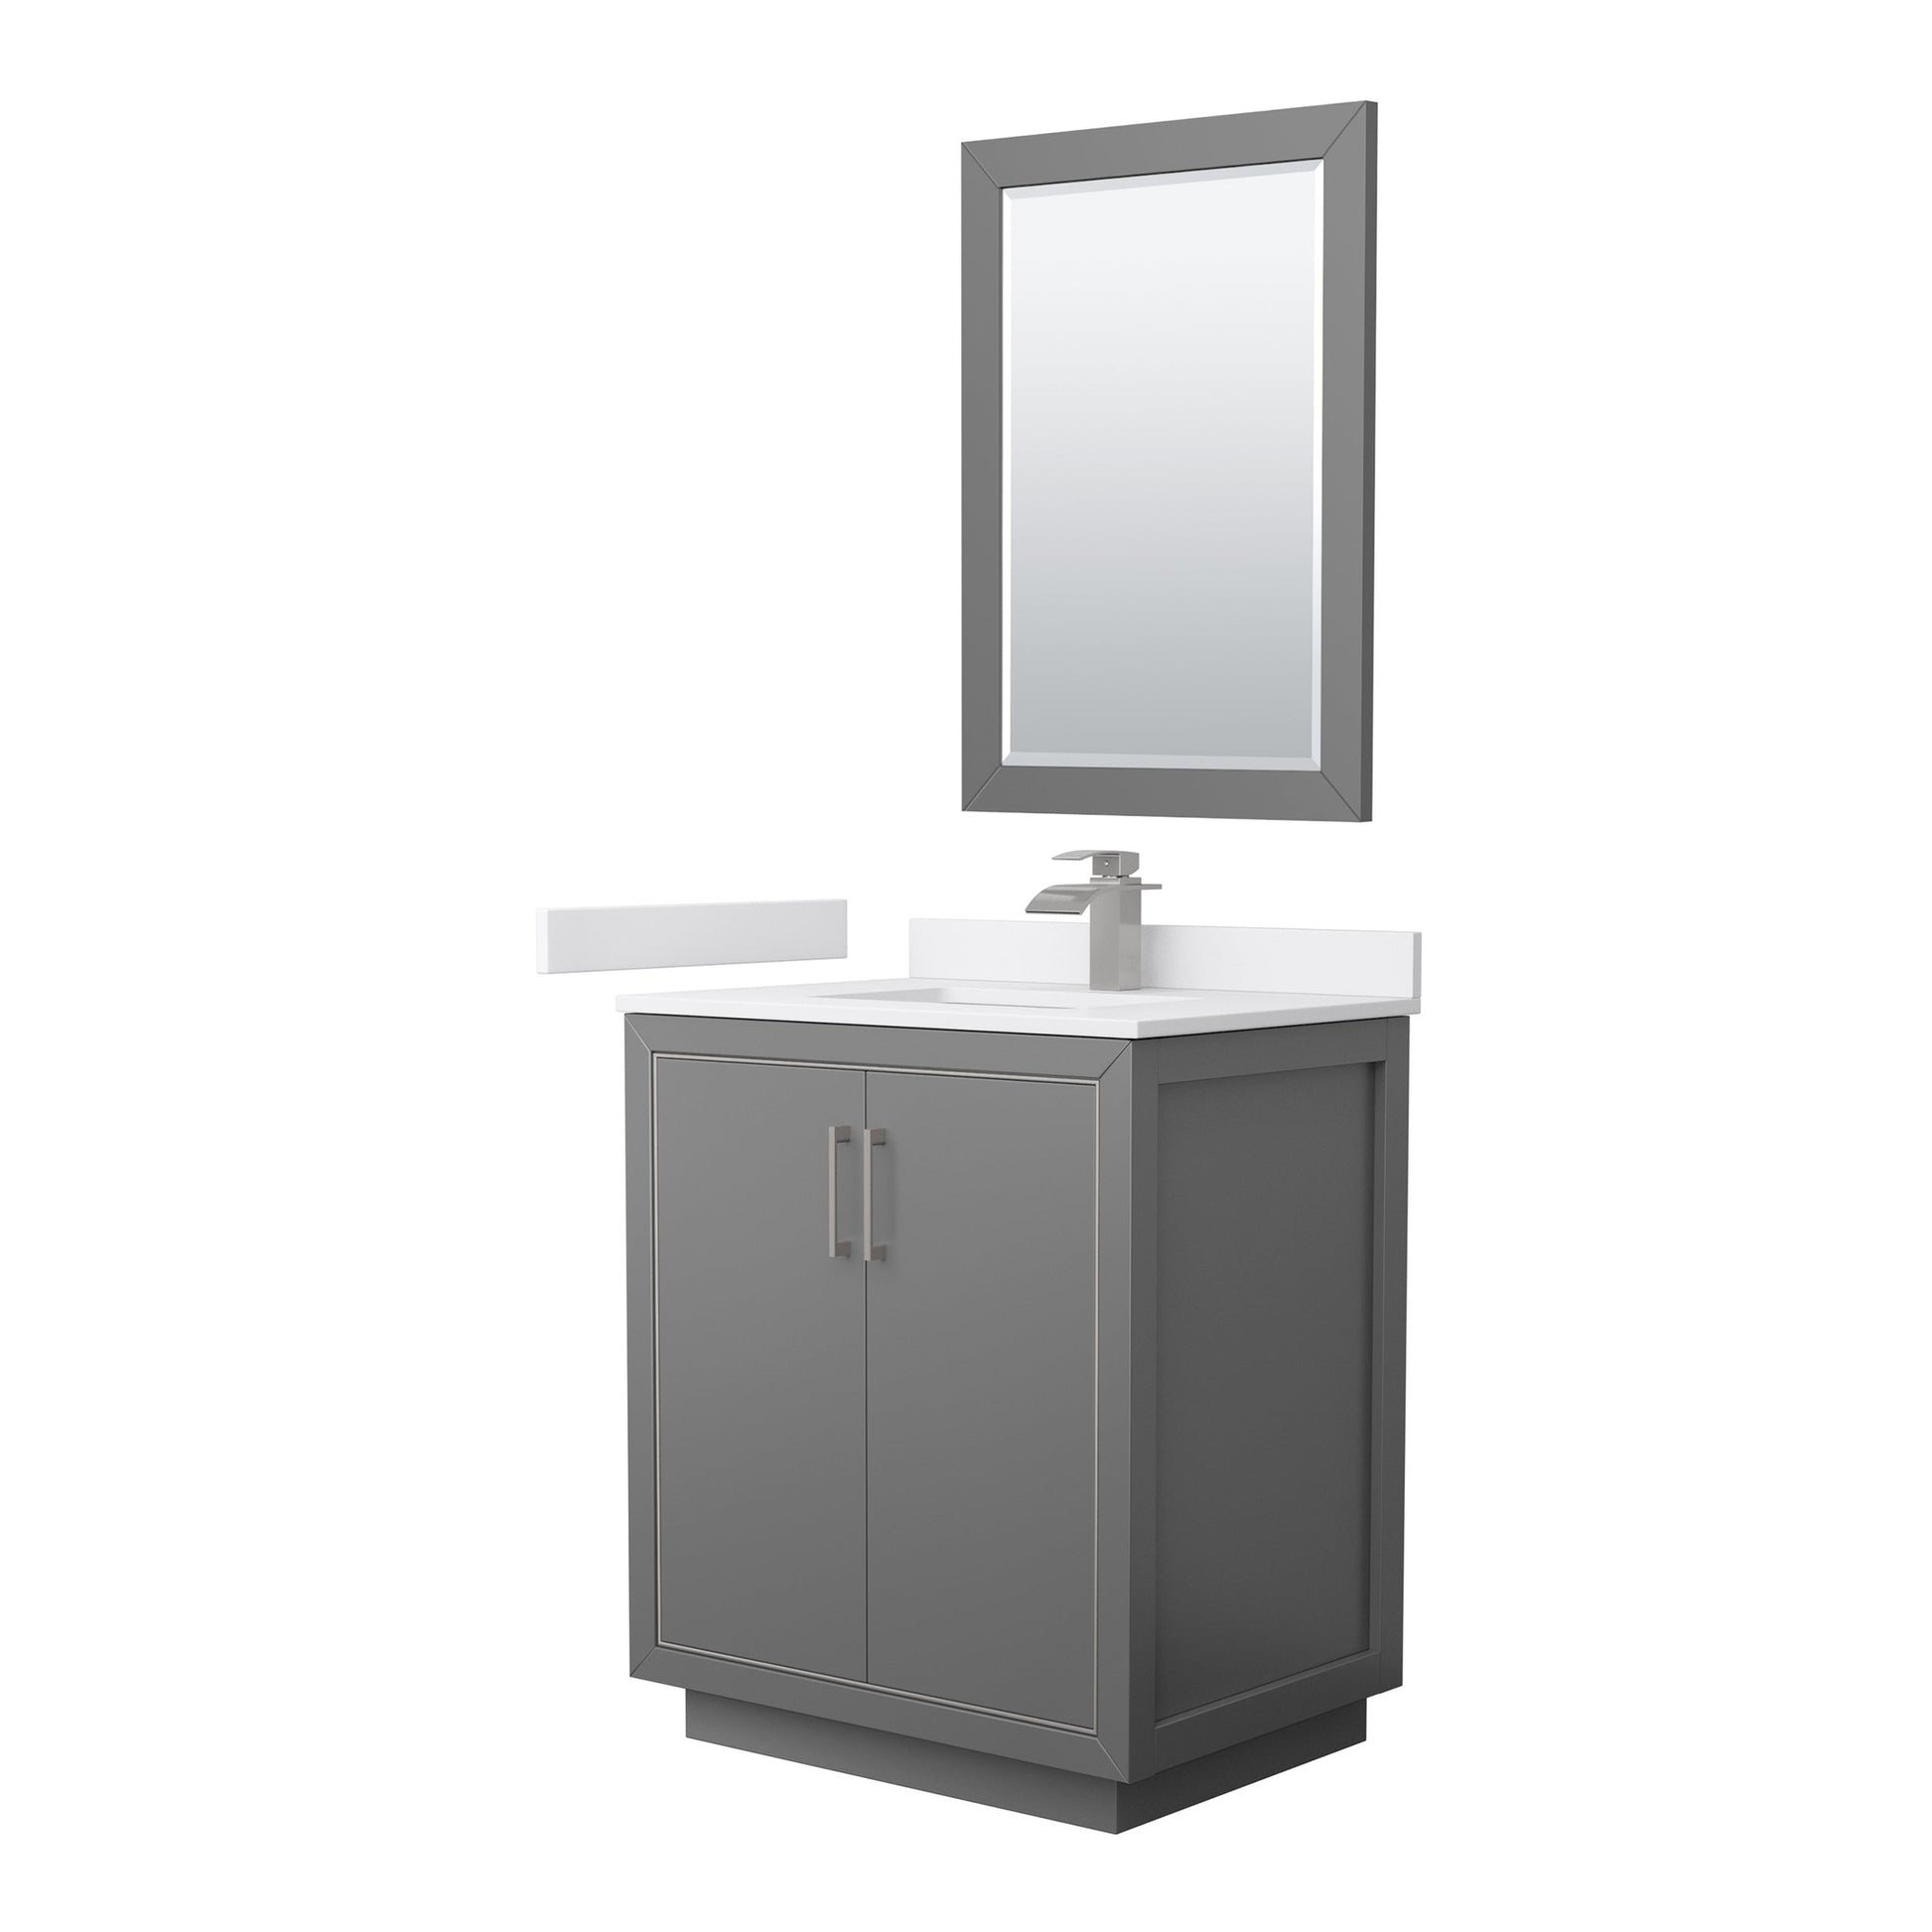 Wyndham Collection Icon 30" Single Bathroom Vanity in Dark Gray, White Cultured Marble Countertop, Undermount Square Sink, Brushed Nickel Trim, 24" Mirror